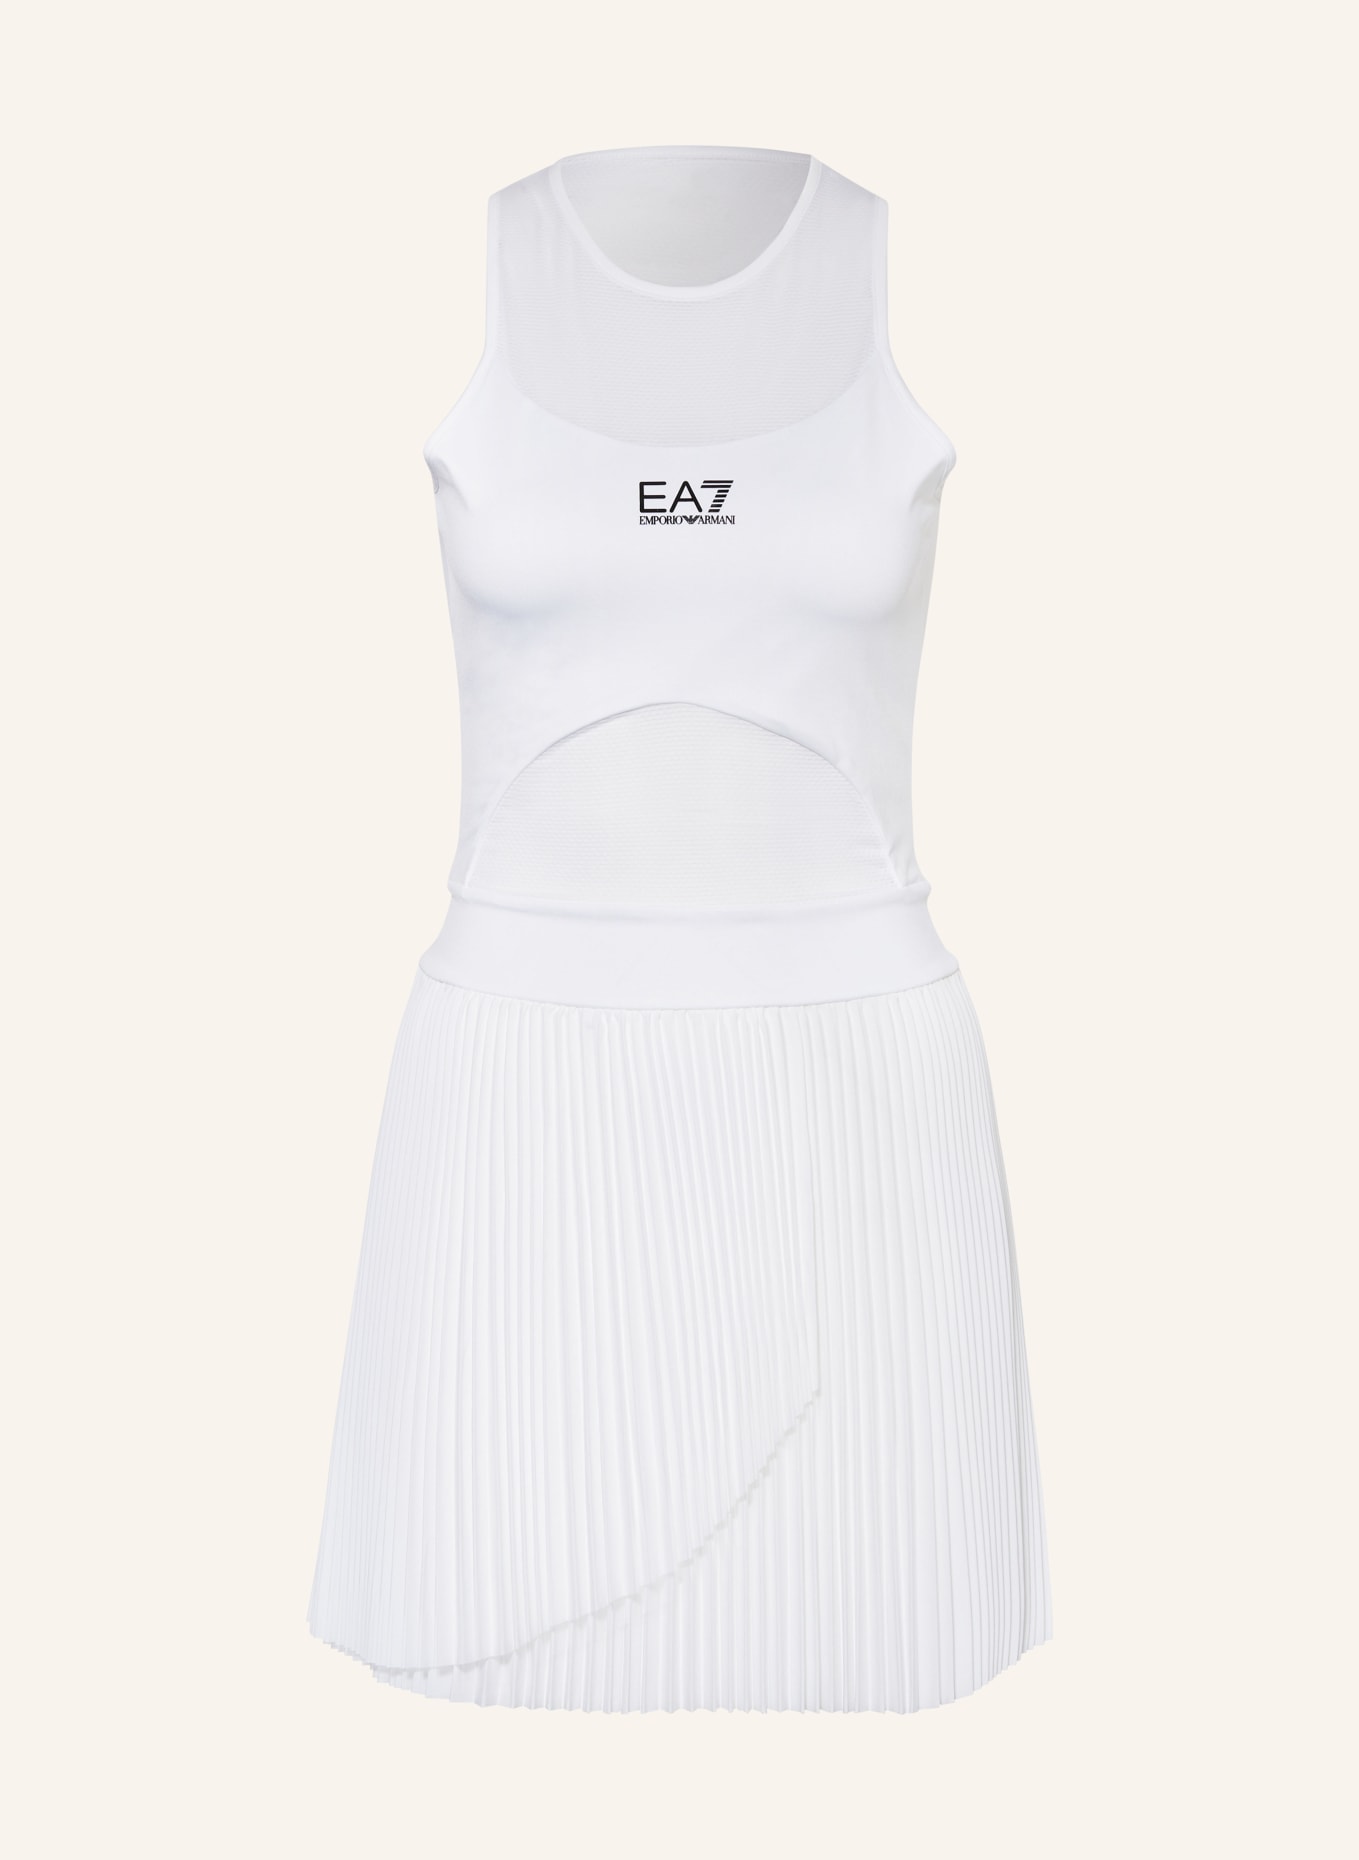 EA7 EMPORIO ARMANI Tenniskleid, Farbe: WEISS (Bild 1)